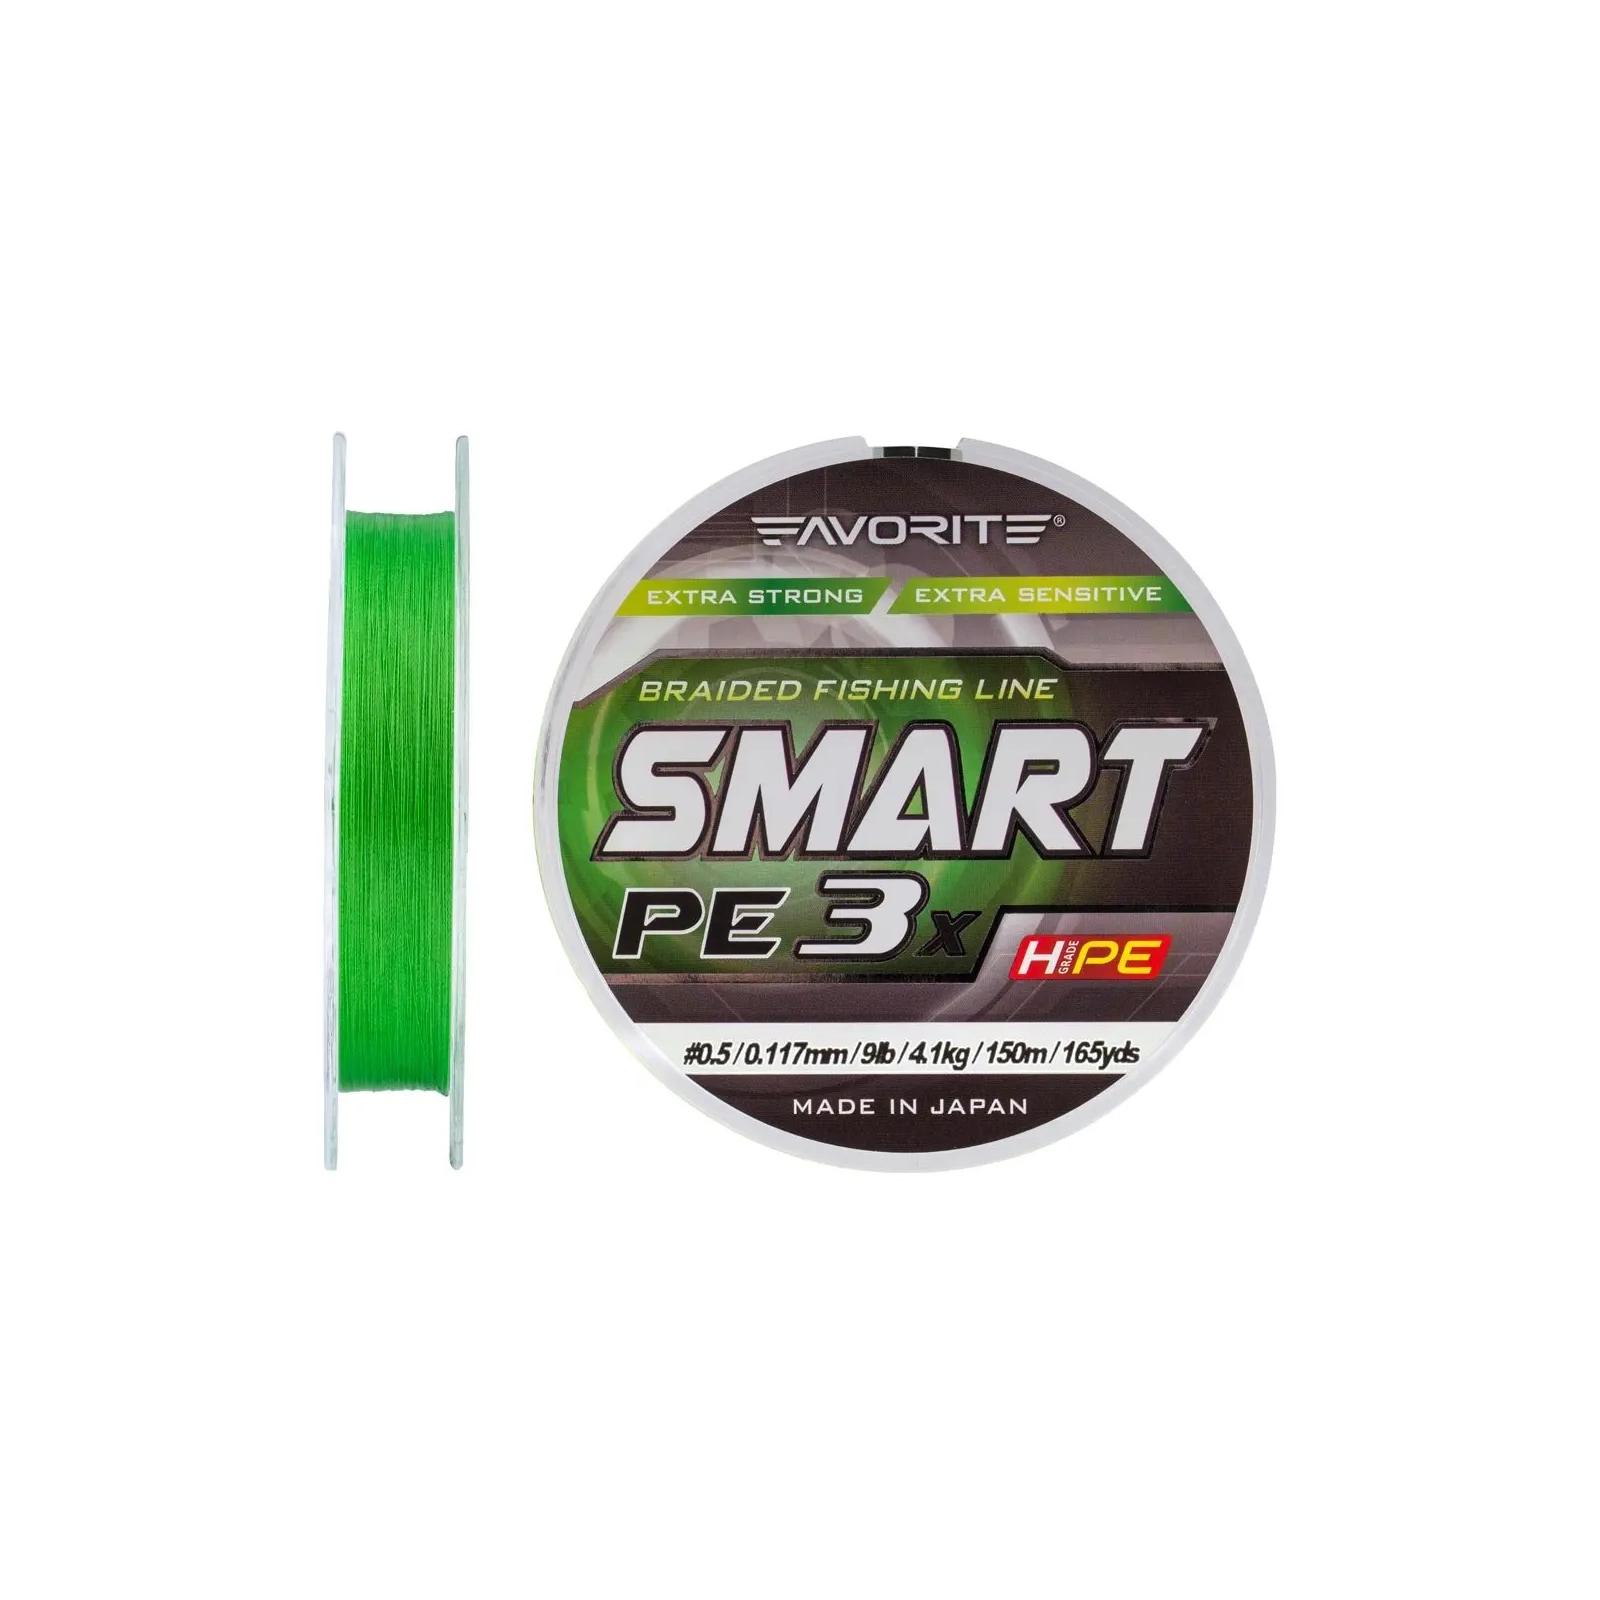 Шнур Favorite Smart PE 3x 150м 0.5/0.117mm 9lb/4.1kg Light Green (1693.10.65) изображение 2